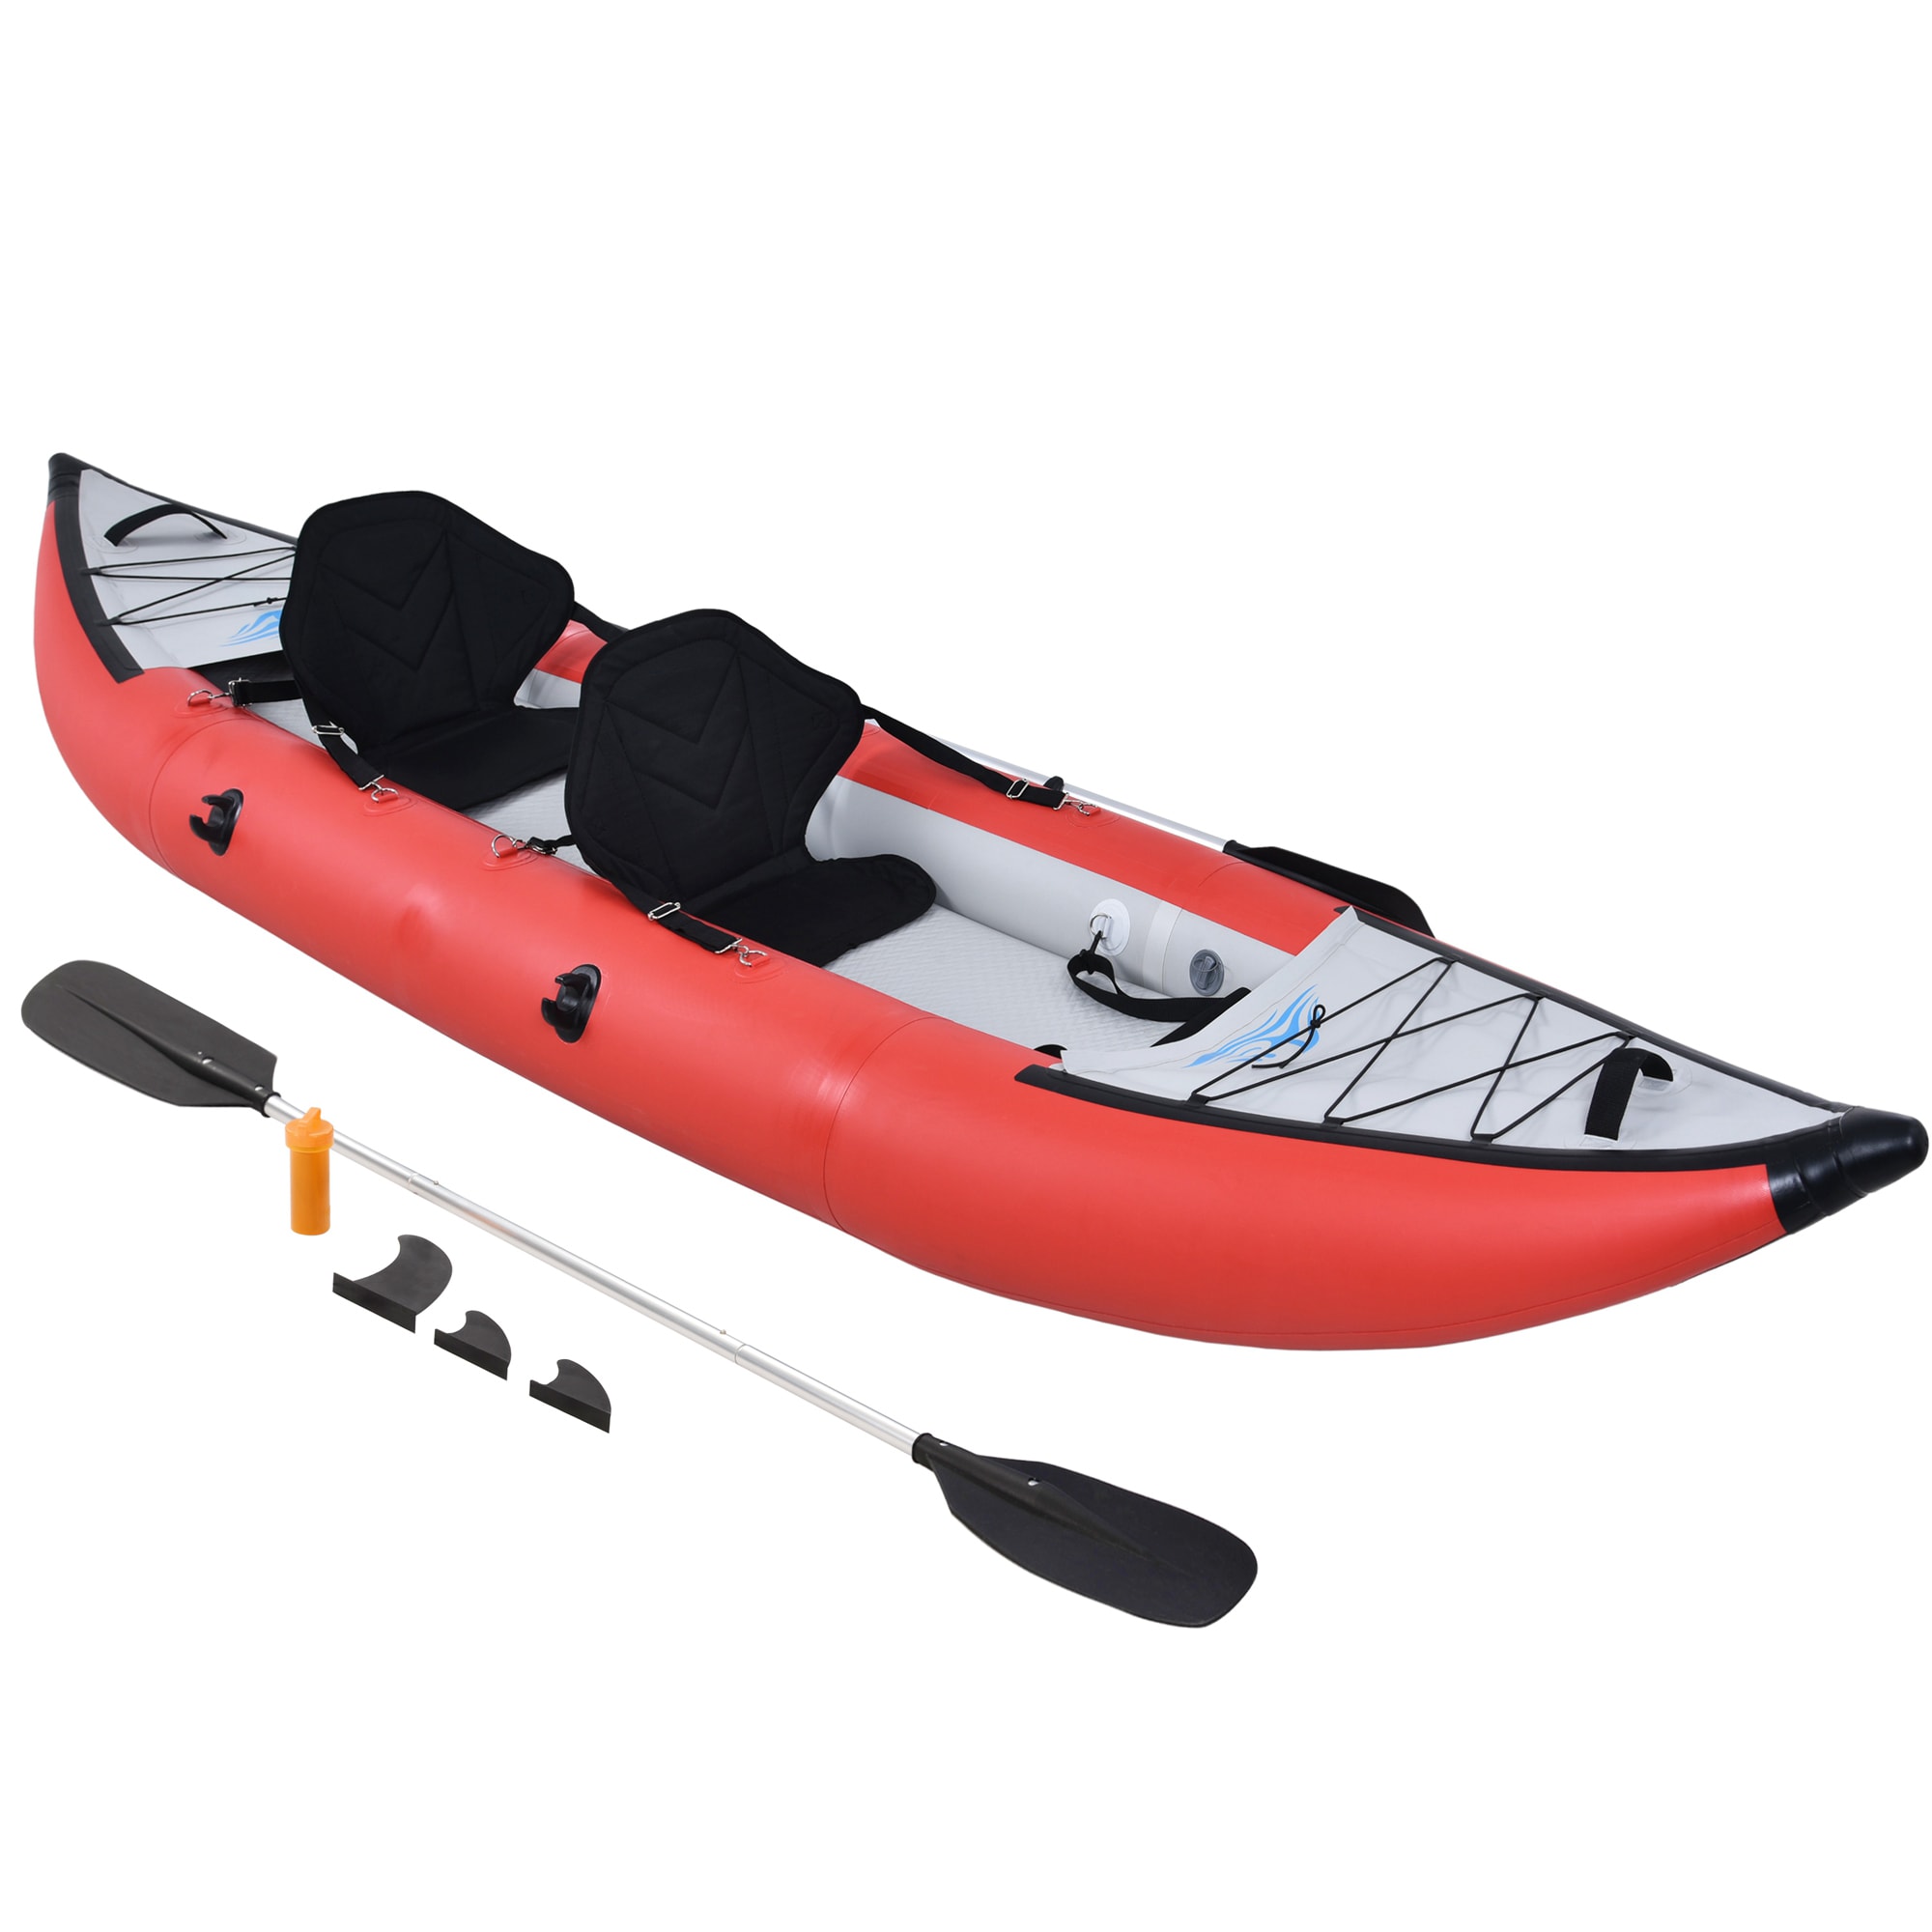  Inflatable Kayak 11' Fishing Boat Kayaks Canoe 2 Person Kayak  Kids Kayak Kyake/Boat 1 Person Foldable Kayak Inflatable Kayak 1 Person  Pedal Boat Inflatable Kayak 2 Person Adult, Blue : Sports & Outdoors